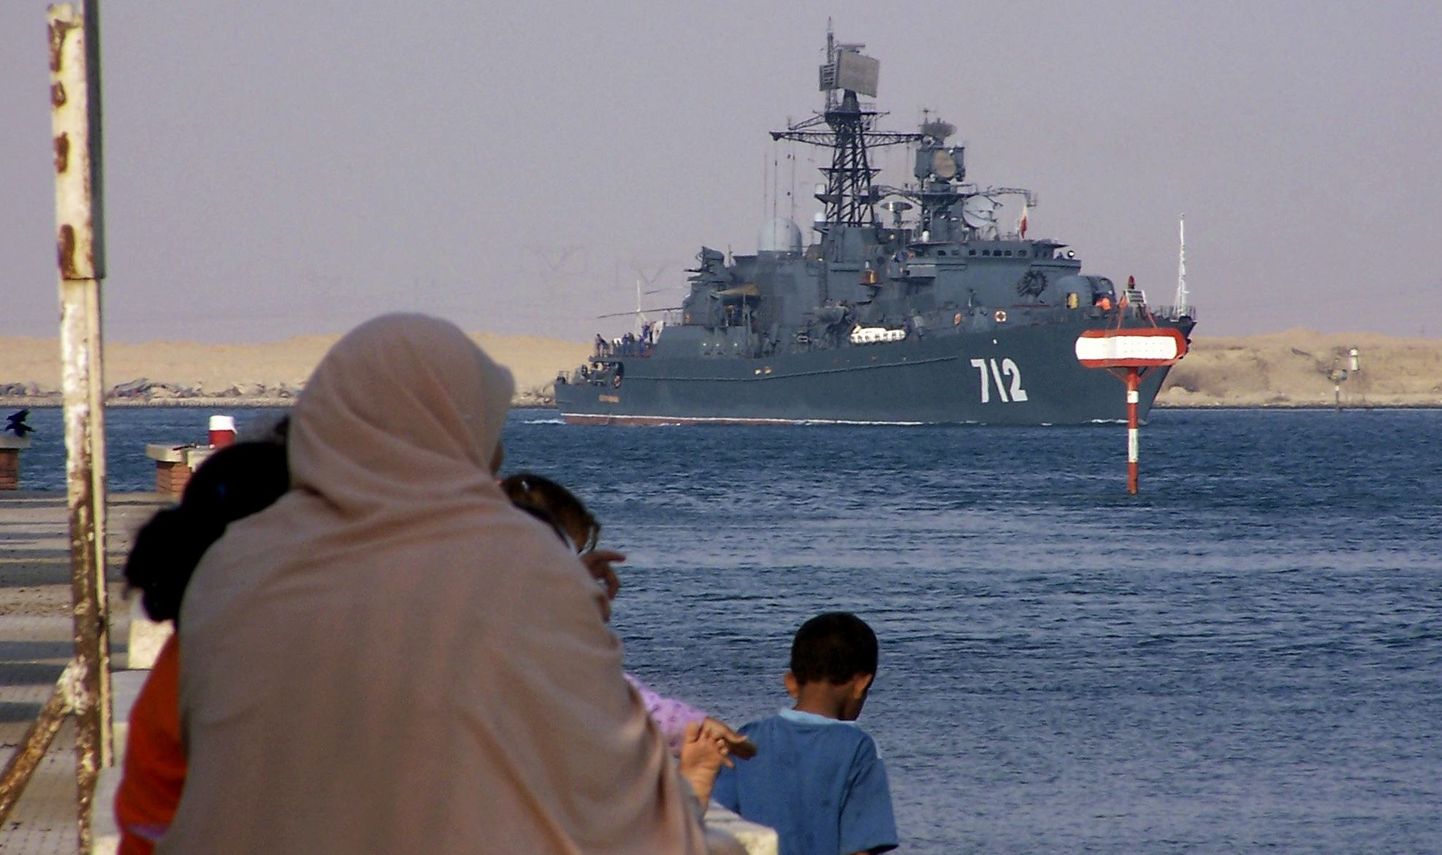 Vene sõjalaevastiku fregatt Neustrašimõi läbimas Suessi kanalit.